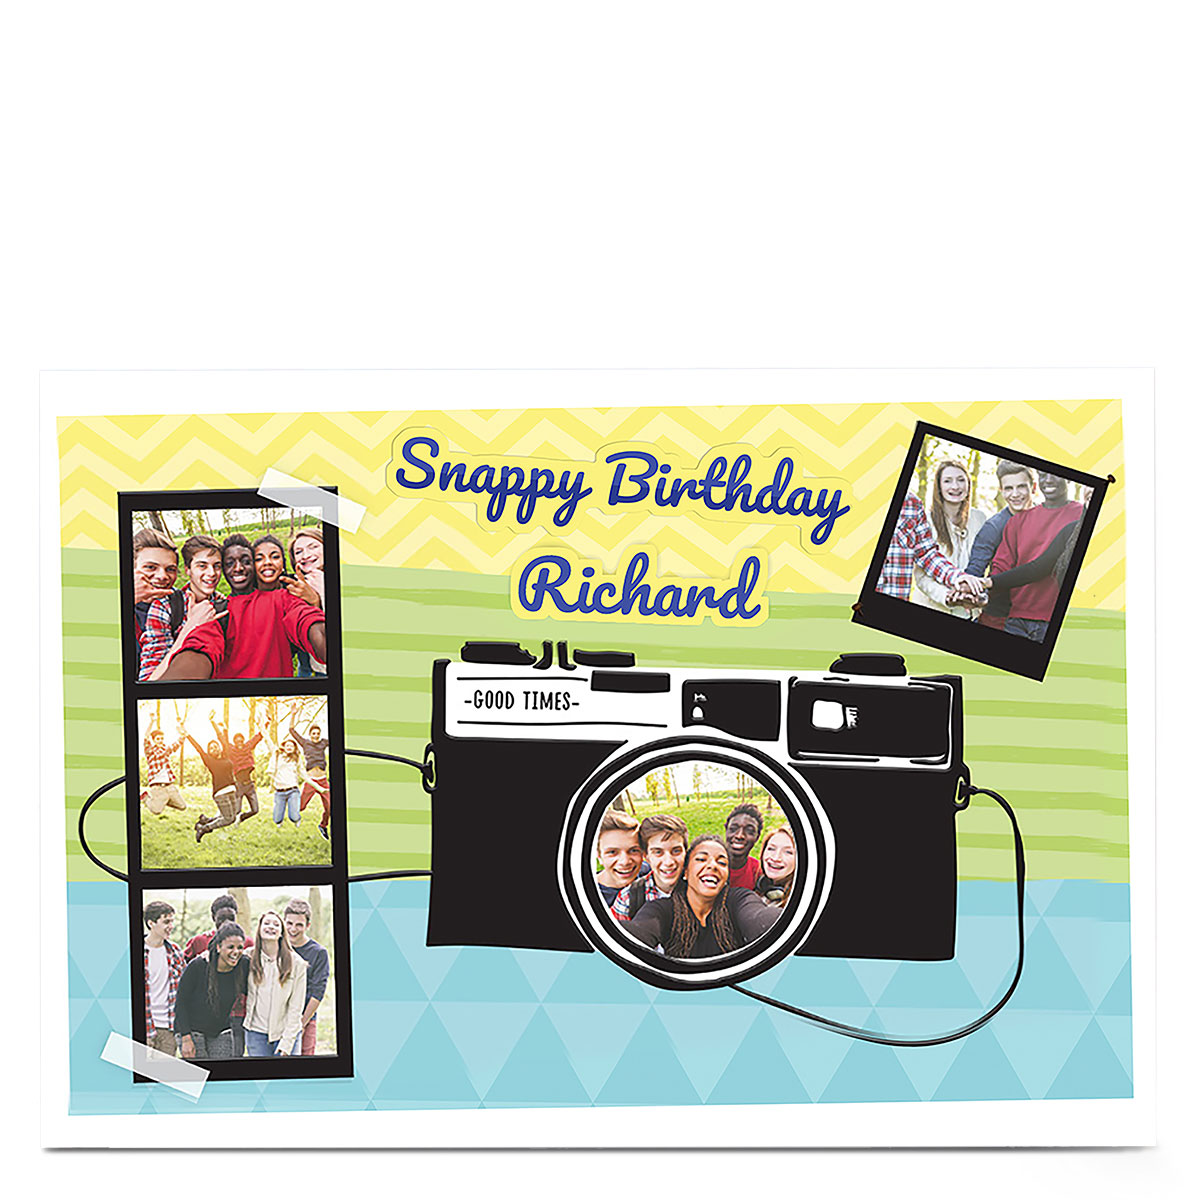 Multi Photo Birthday Card - Snappy Birthday